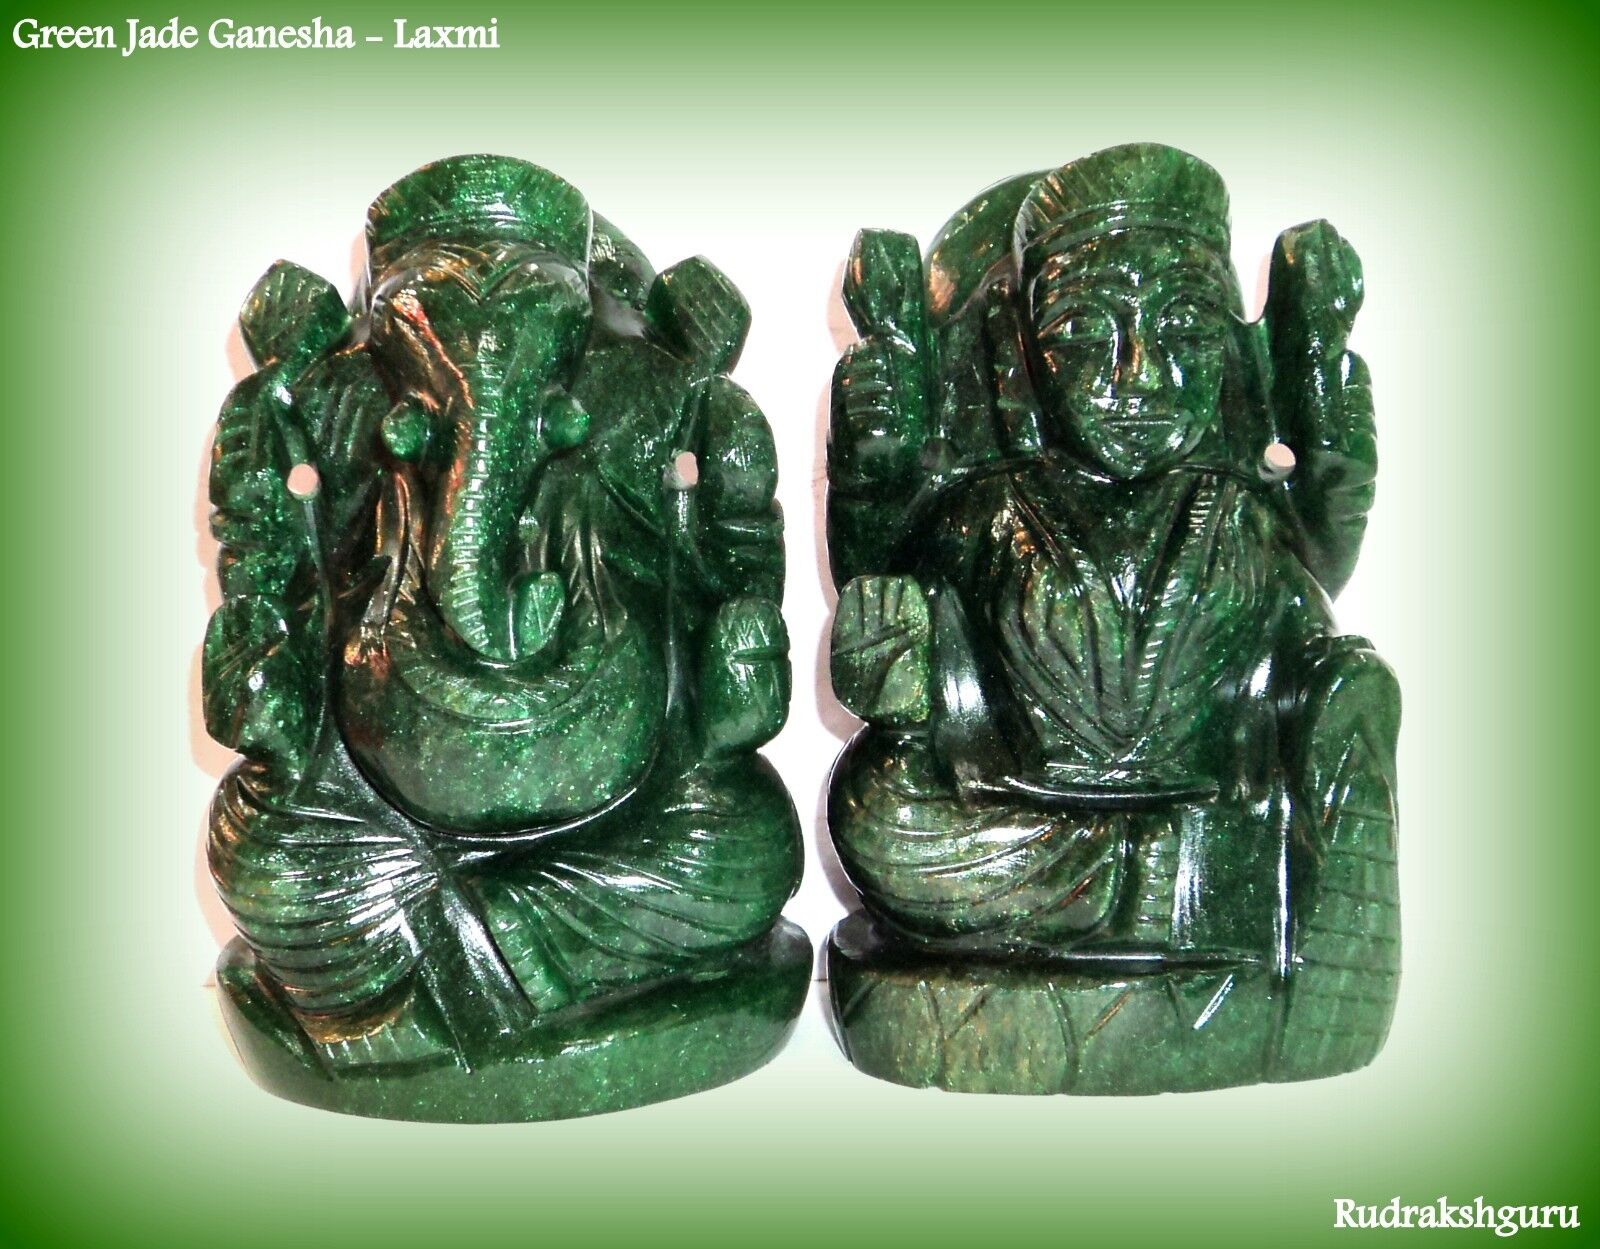 Divine Pair of Laxmi Ganesha Idols In Natural Green Jade - 1651 gm 